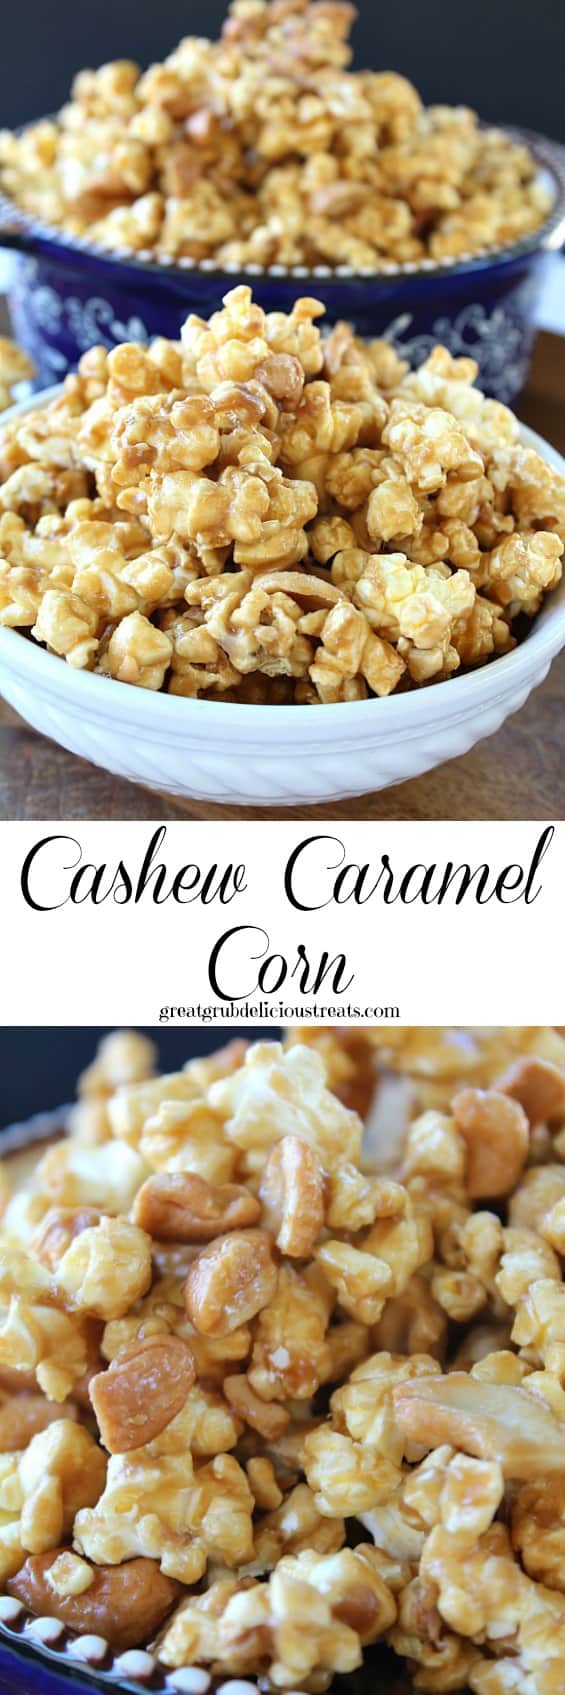 Cashew Caramel Corn